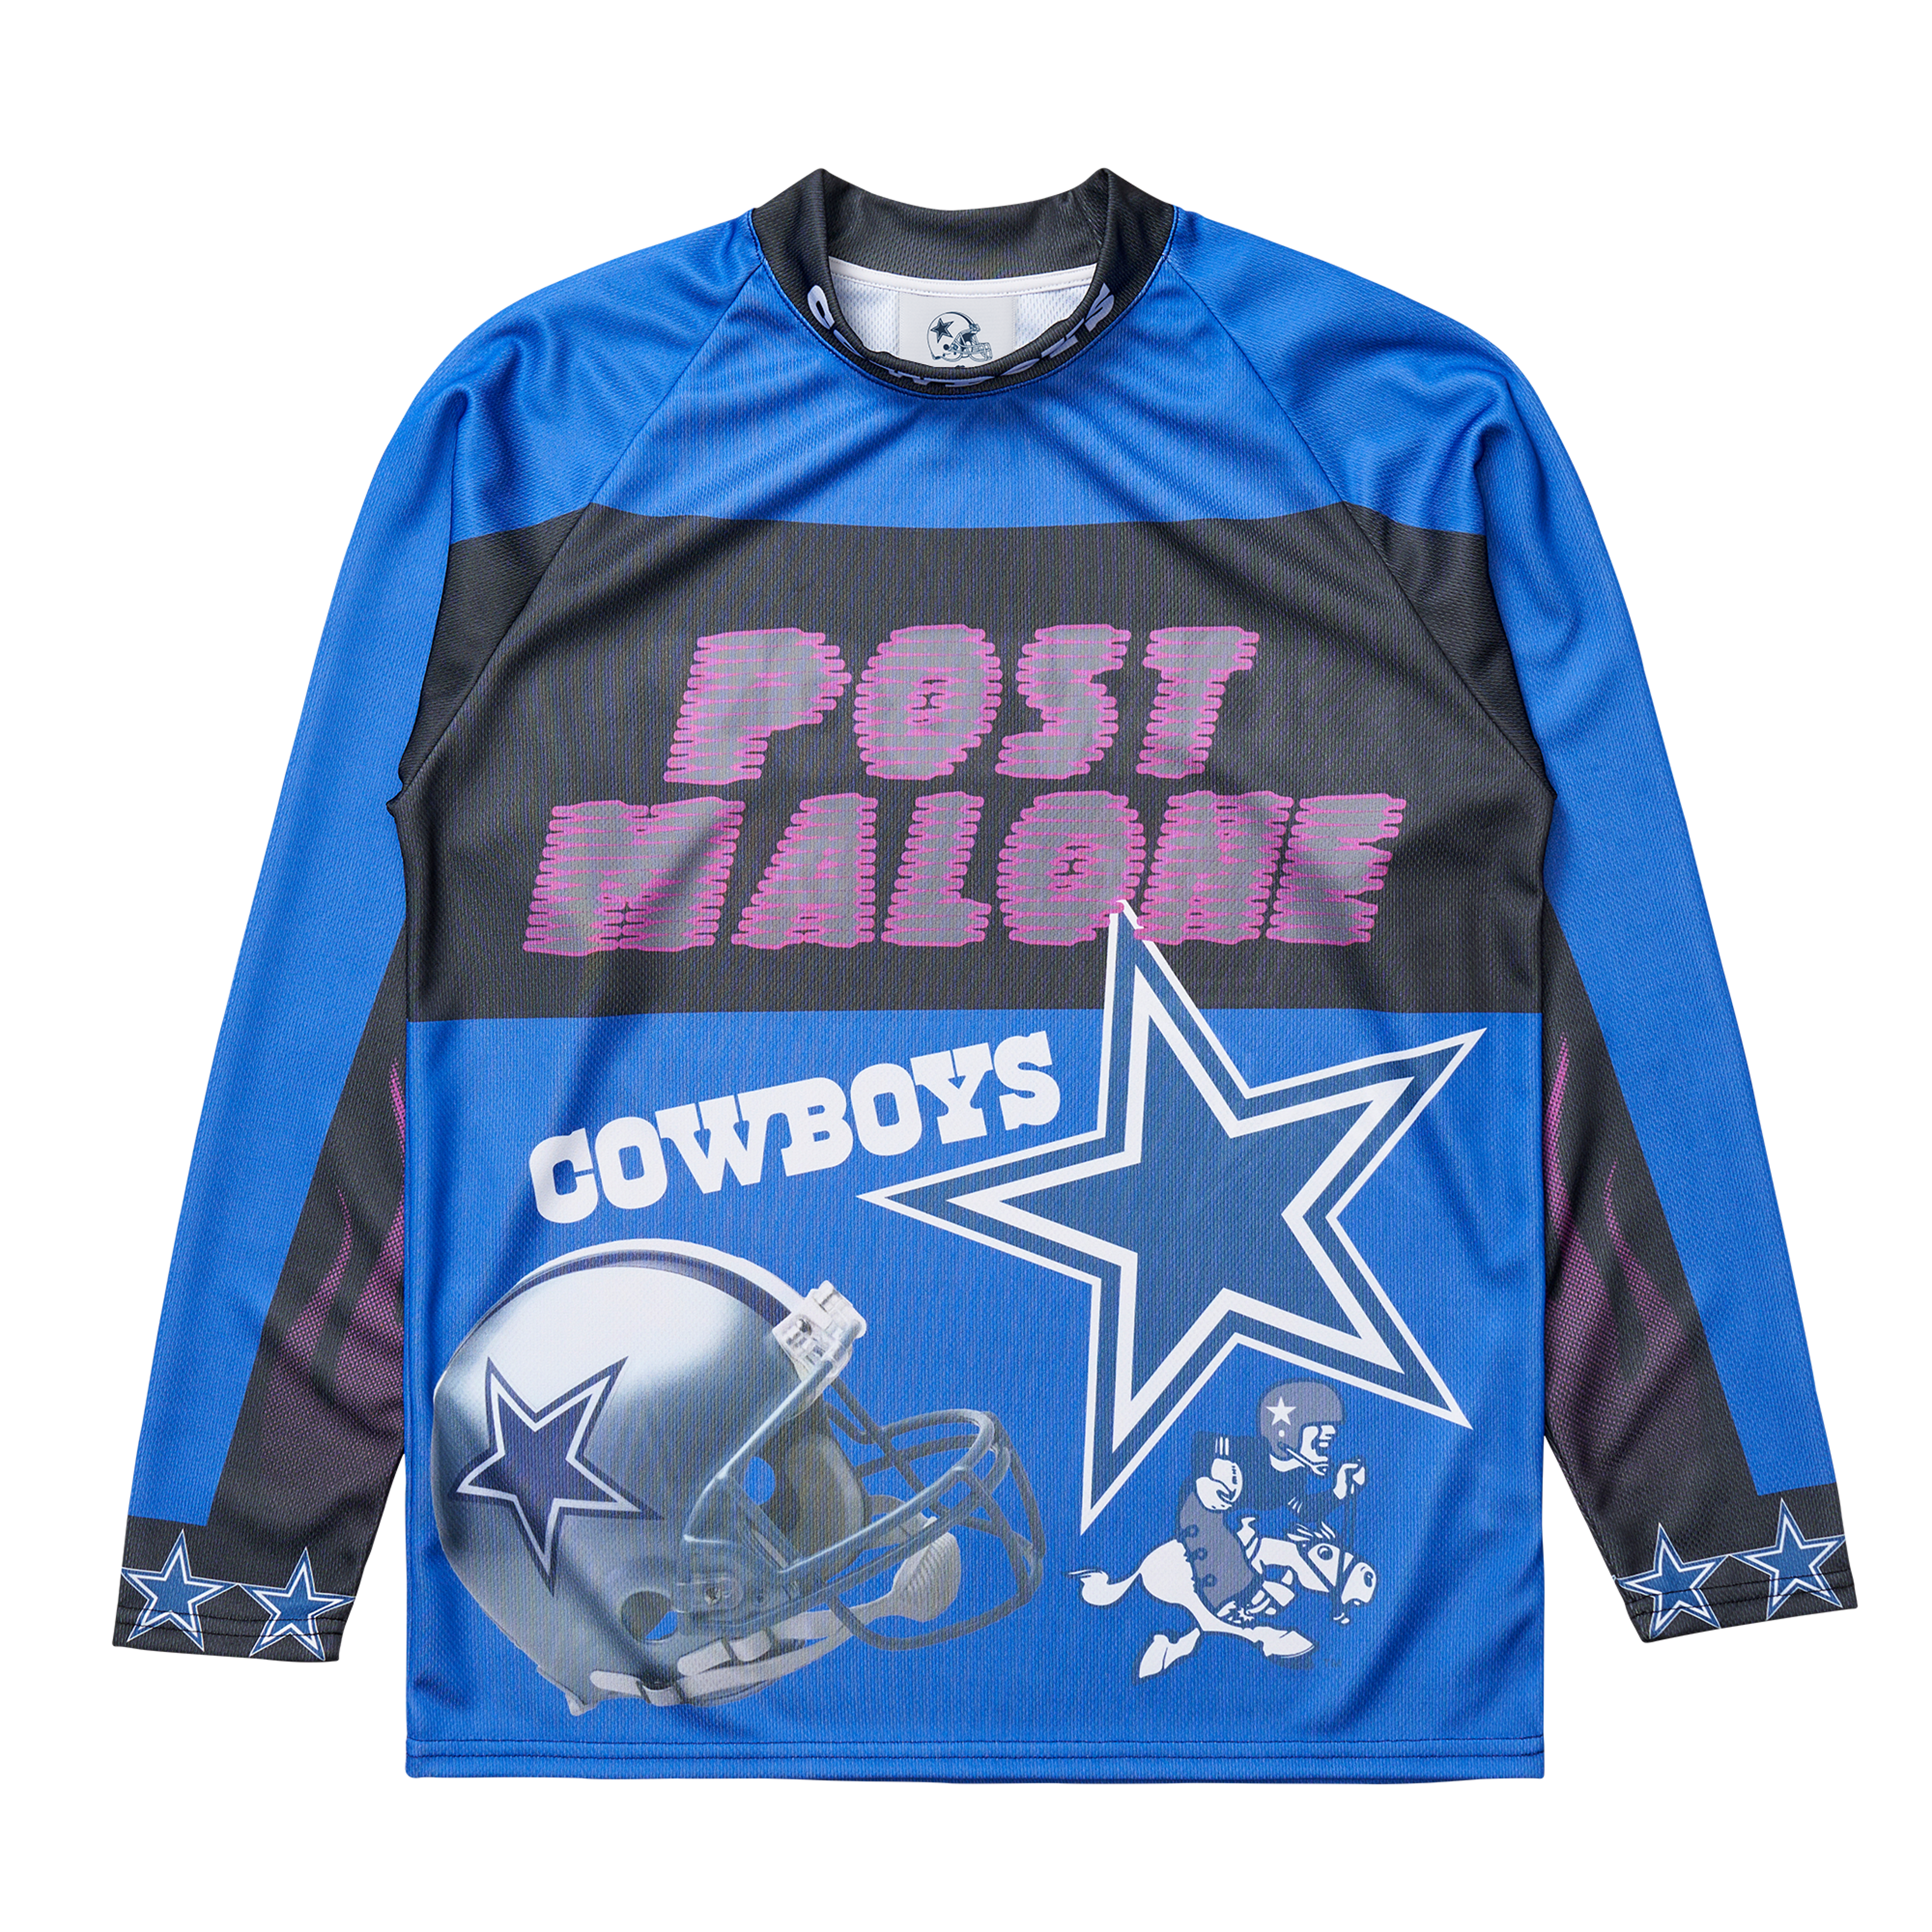 Post Malone + Dallas Cowboys Motocross Jersey